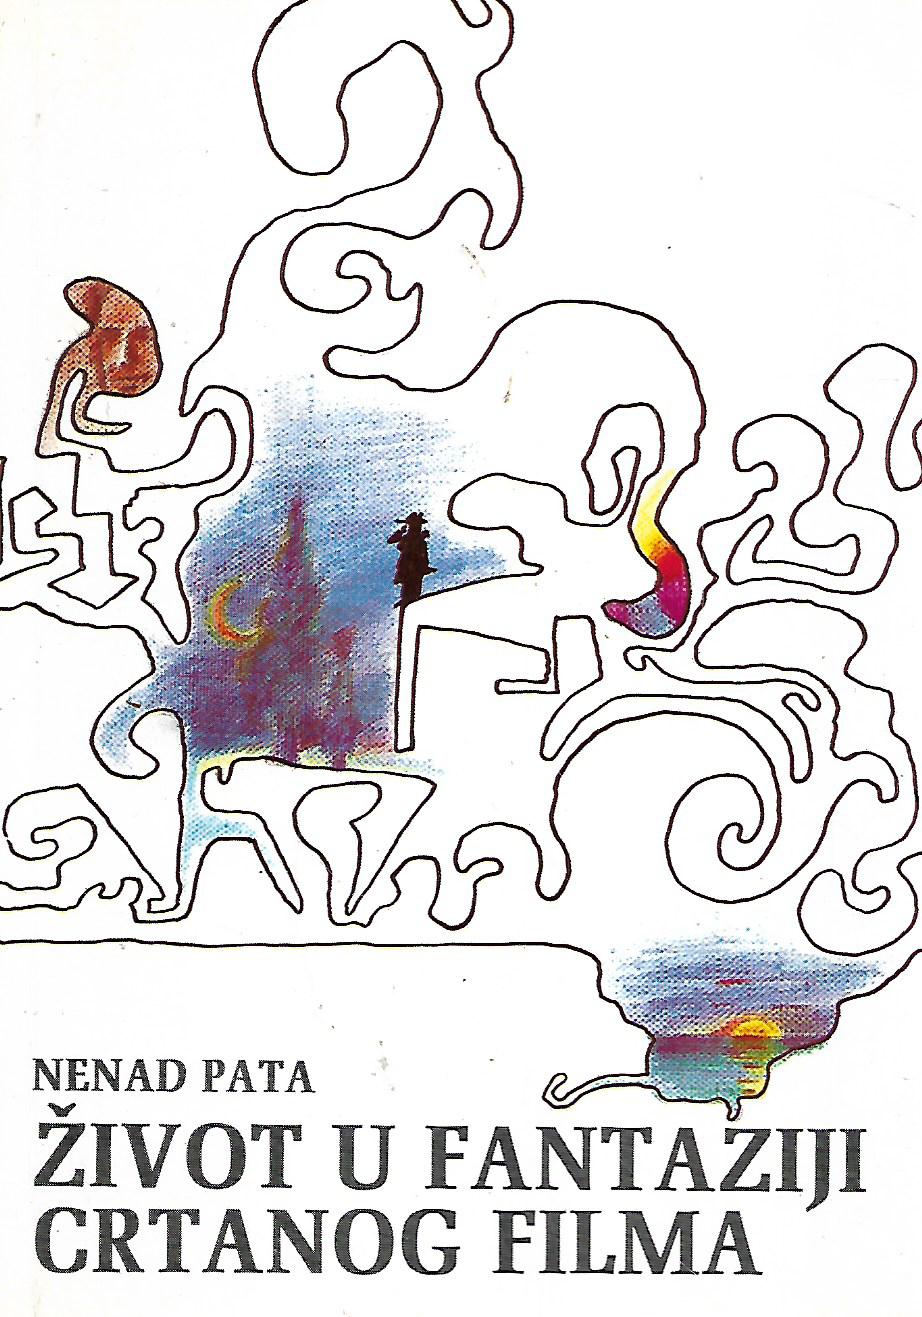 Nenad Pata: Život u fantaziji crtanog filma